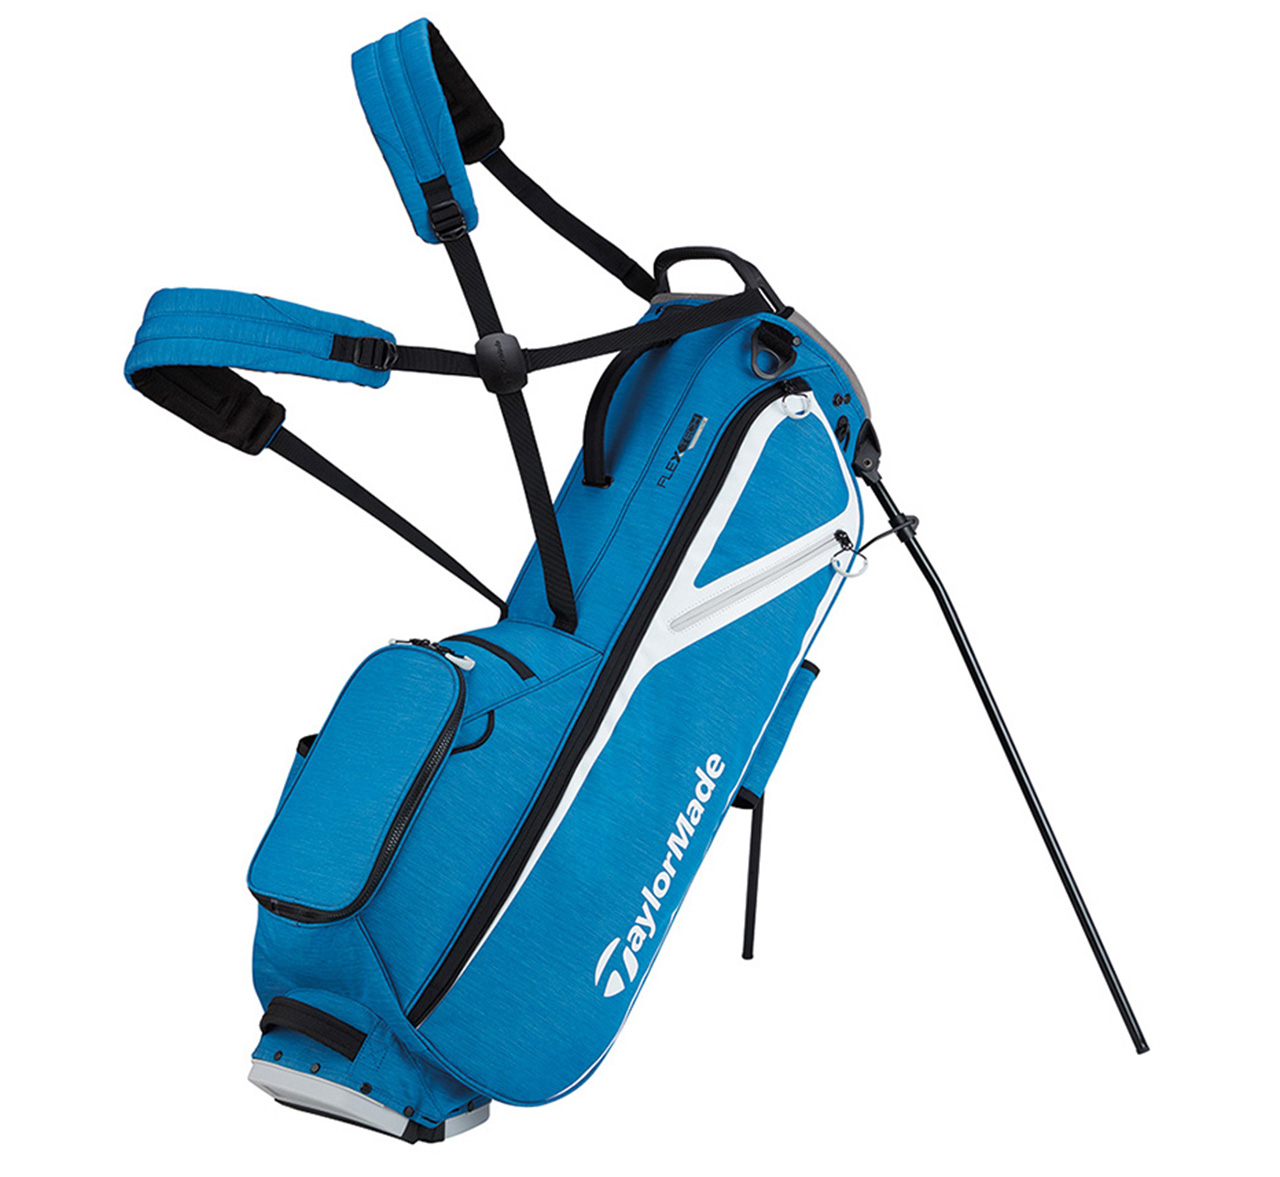 AGoodWalk: Modern golf bags lighten the load with plenty of options